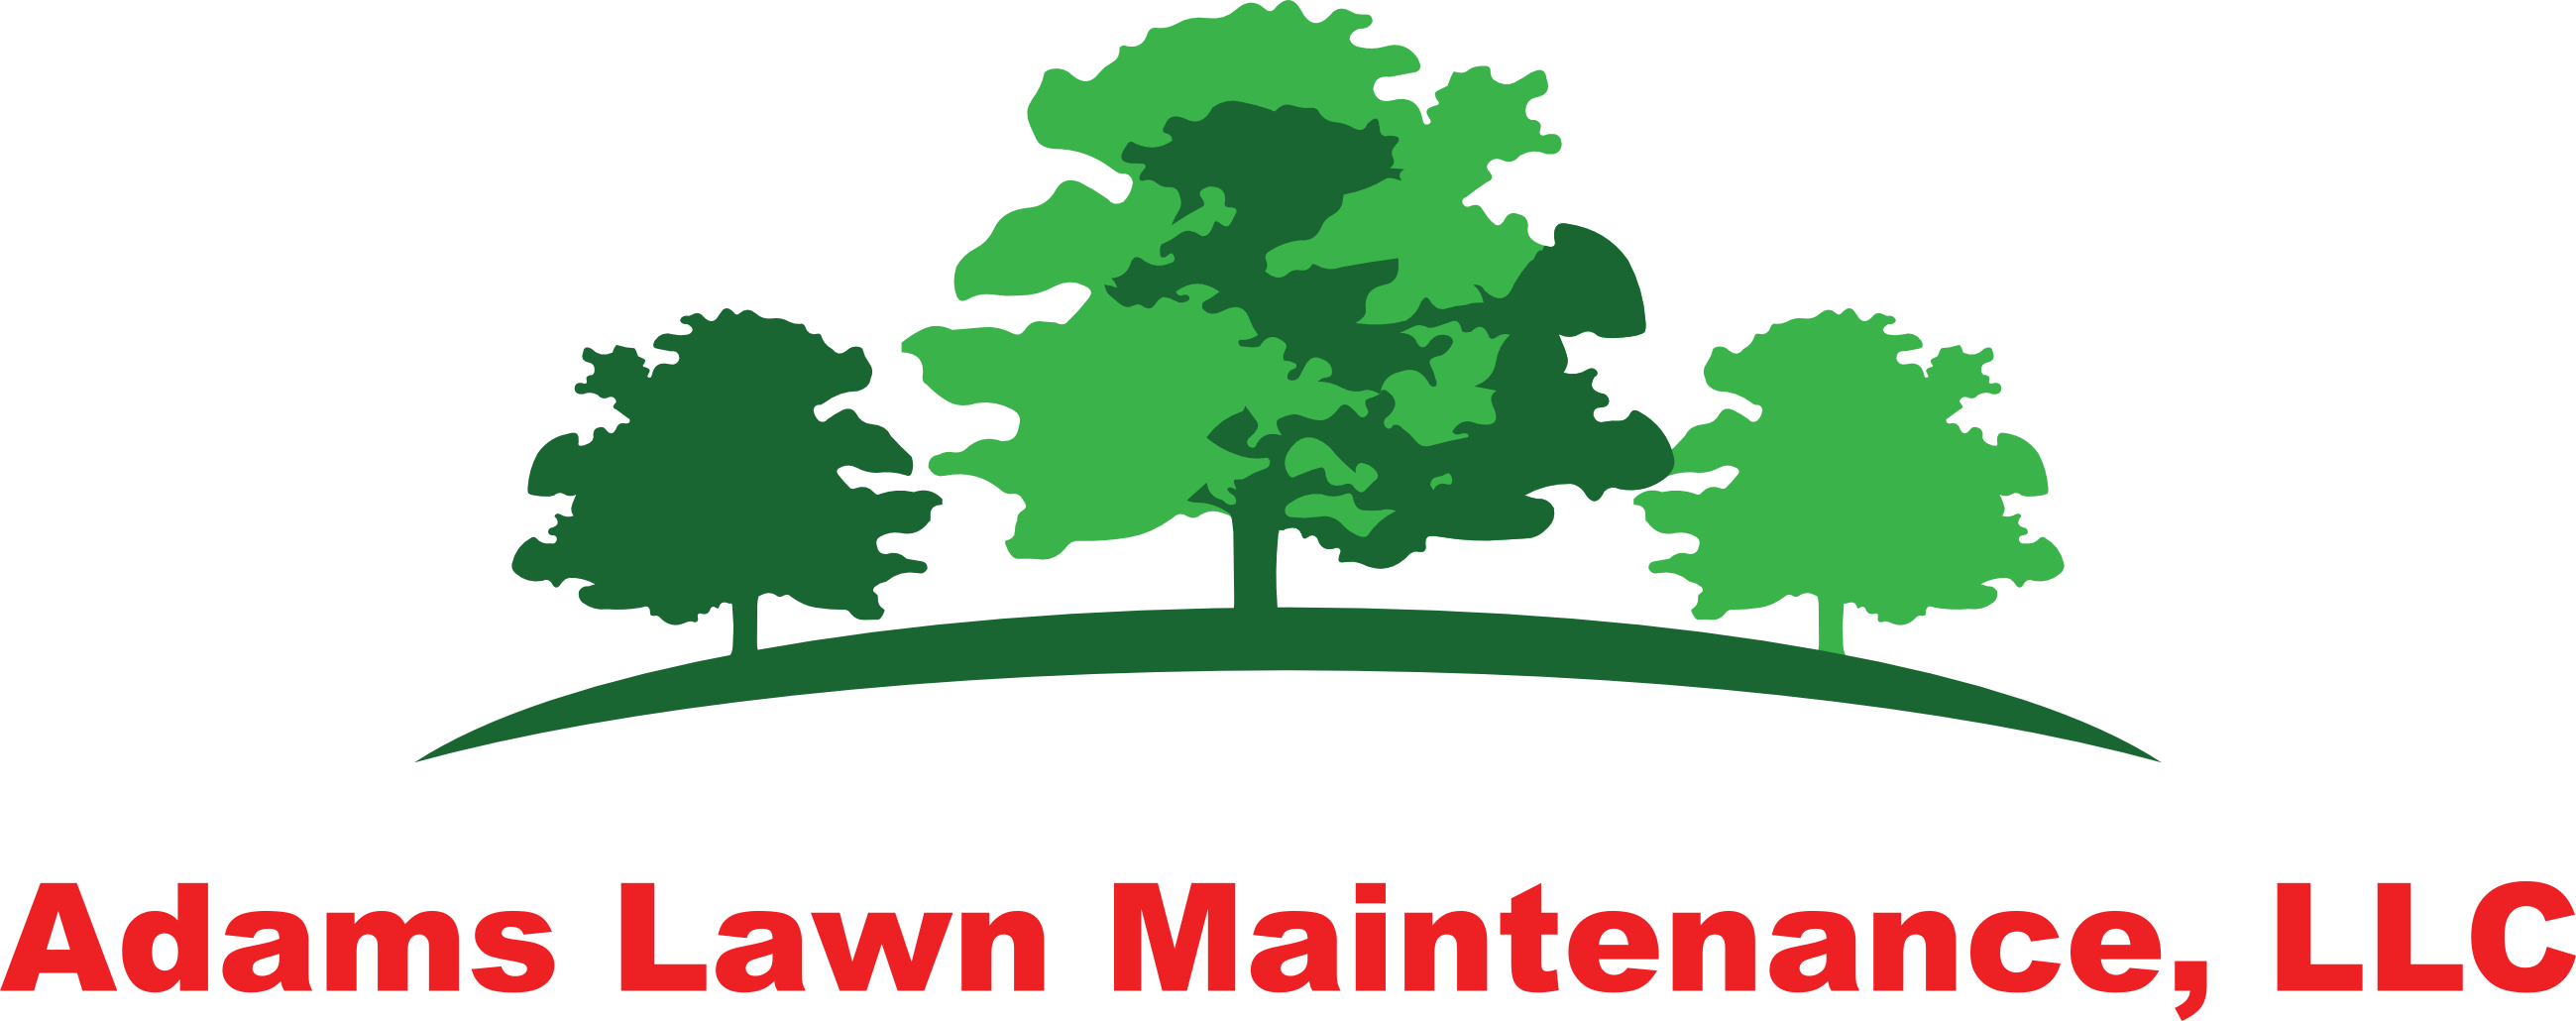 Adams Lawn Maintenance, Llc - Garden (2599x1030)